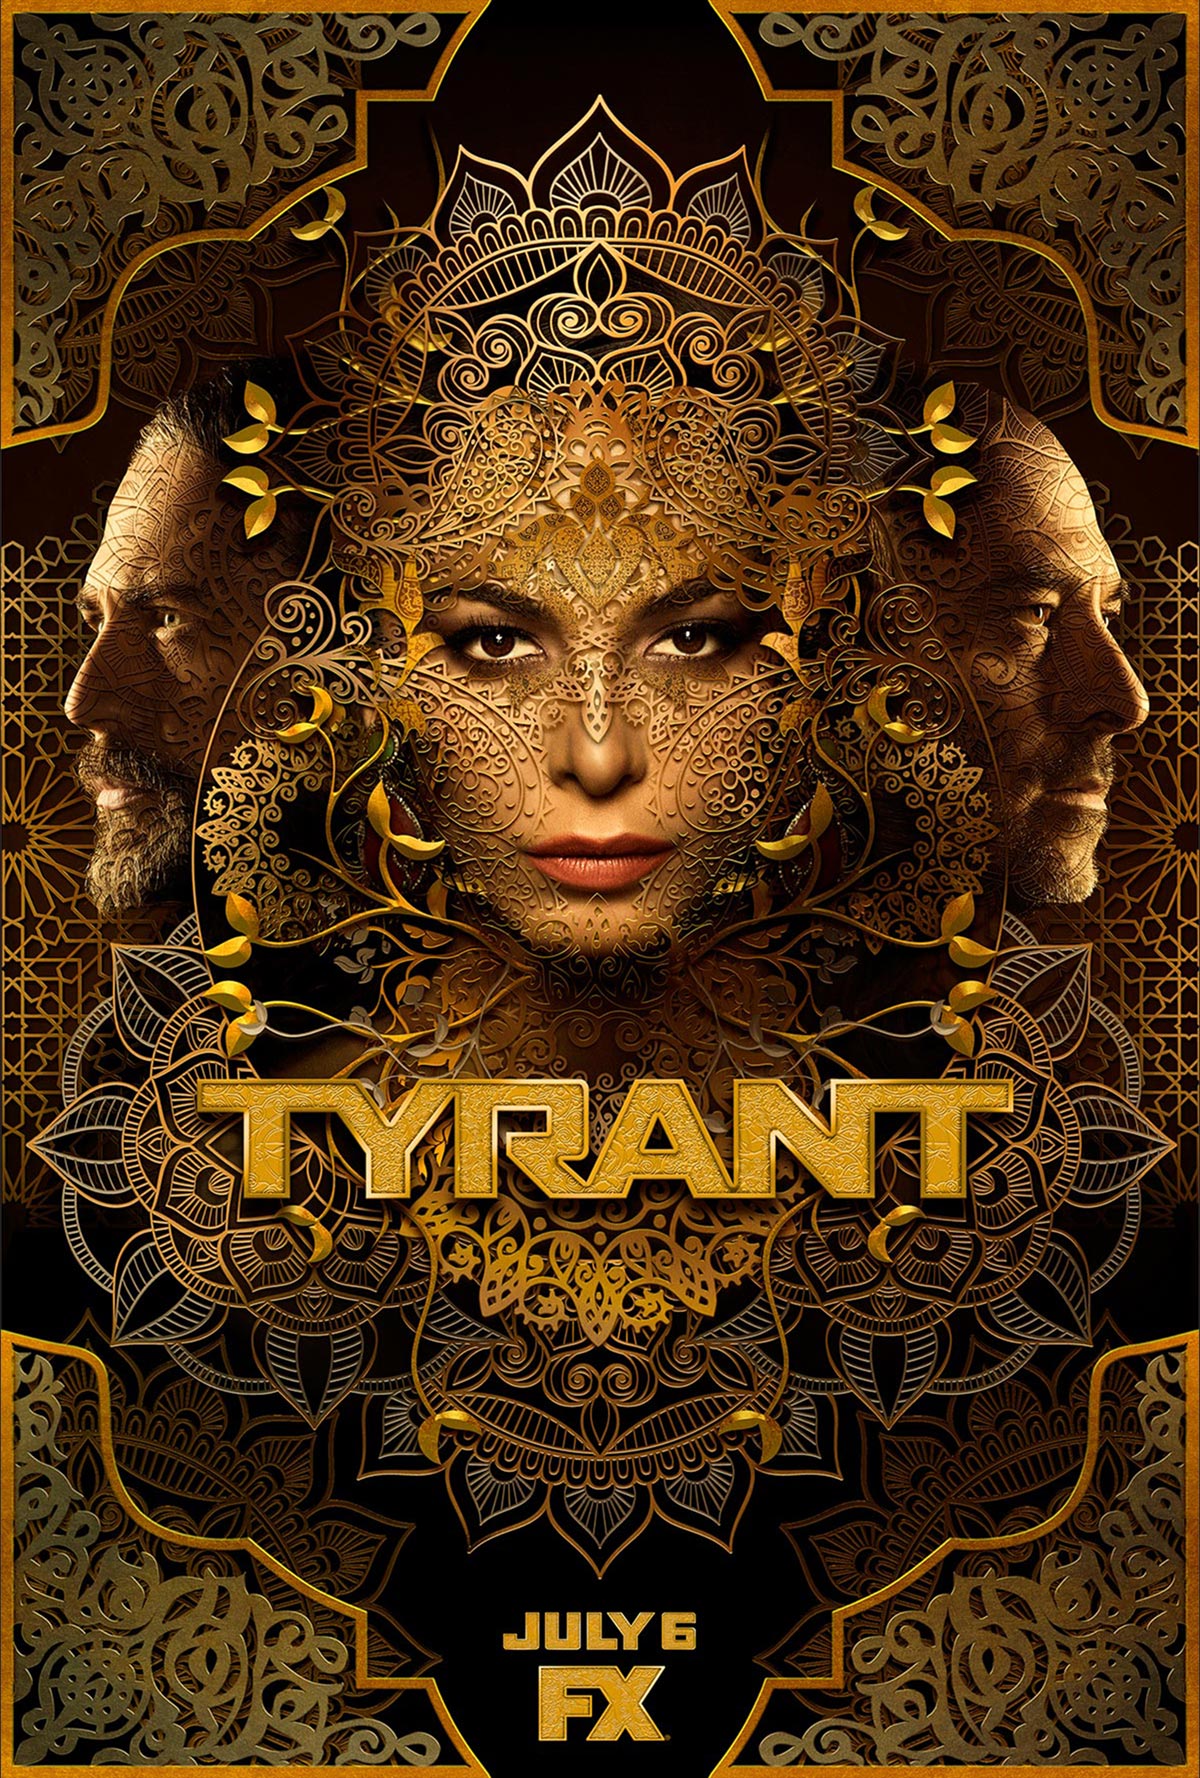 018_dreamogram-iconisus-key-art-movie-poster-tyrant-season-3-2_vertical-cover